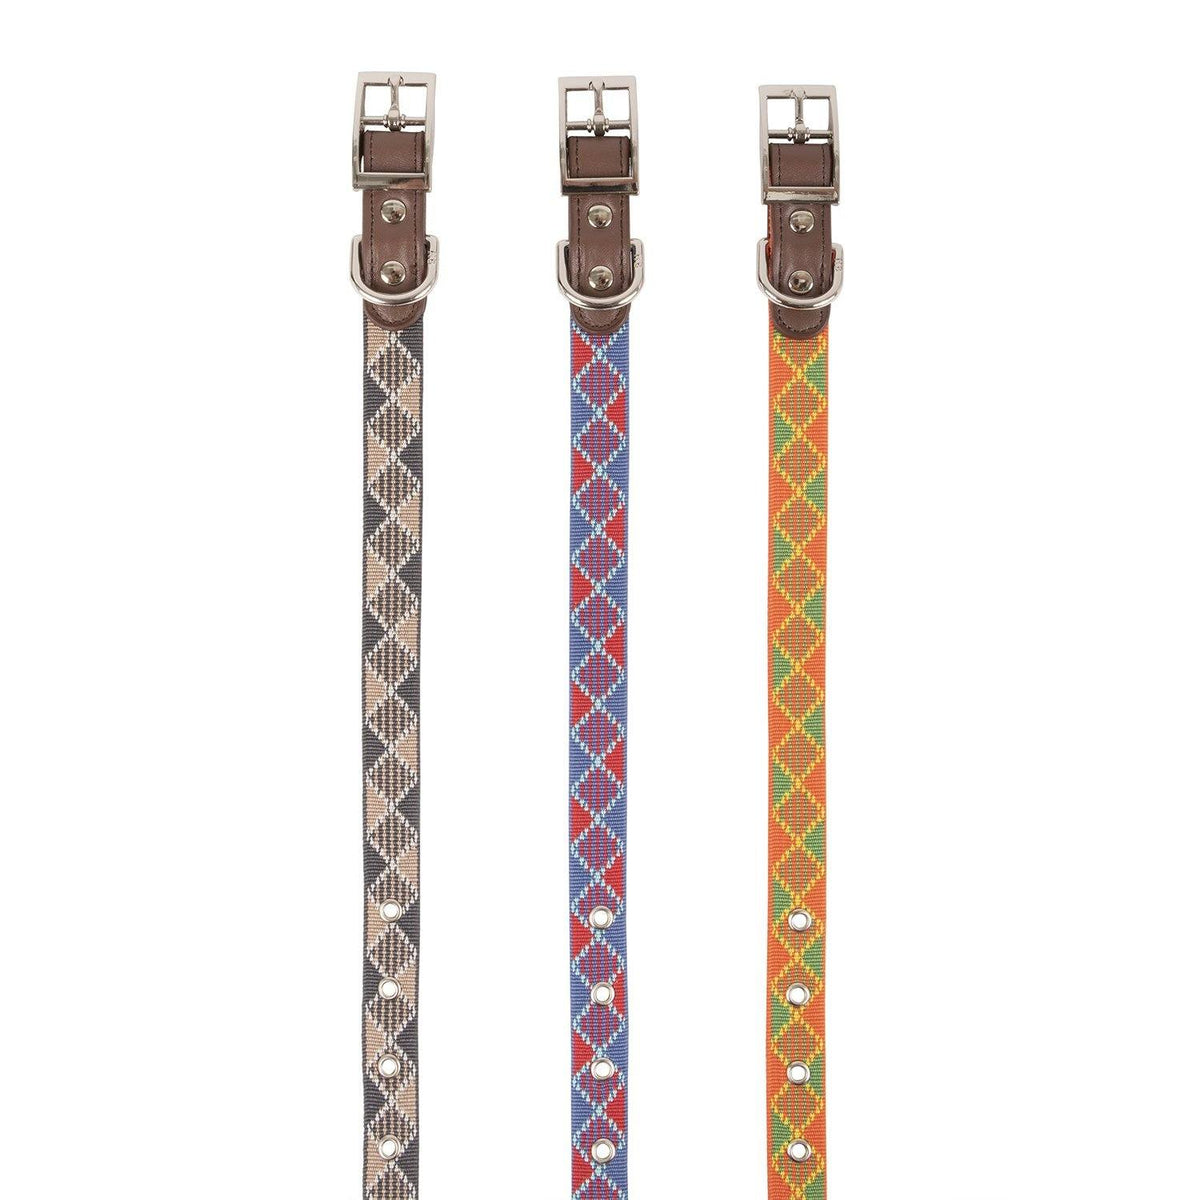 Collar - New! Plaid Dog Collar